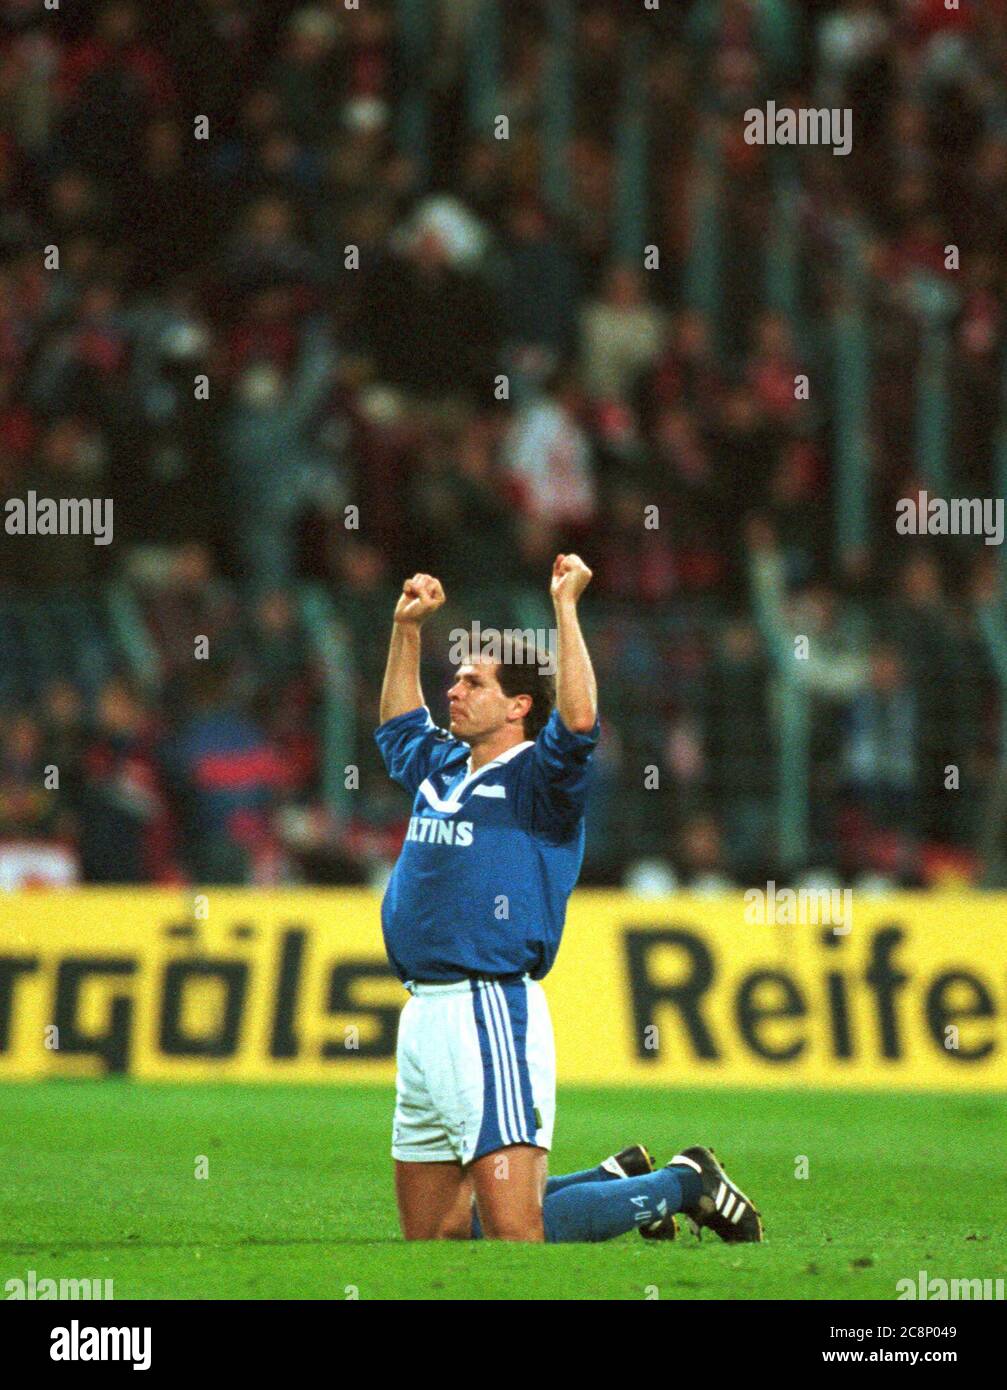 Parkstadion Gelsenkirchen Germany 11.11.2000, Football: 1st German Bundesliga, Schalke 04 (S04, blue) vs FC Bayern Munich (FCB, red) 3:2 — Andreas Moeller (S04) Stock Photo